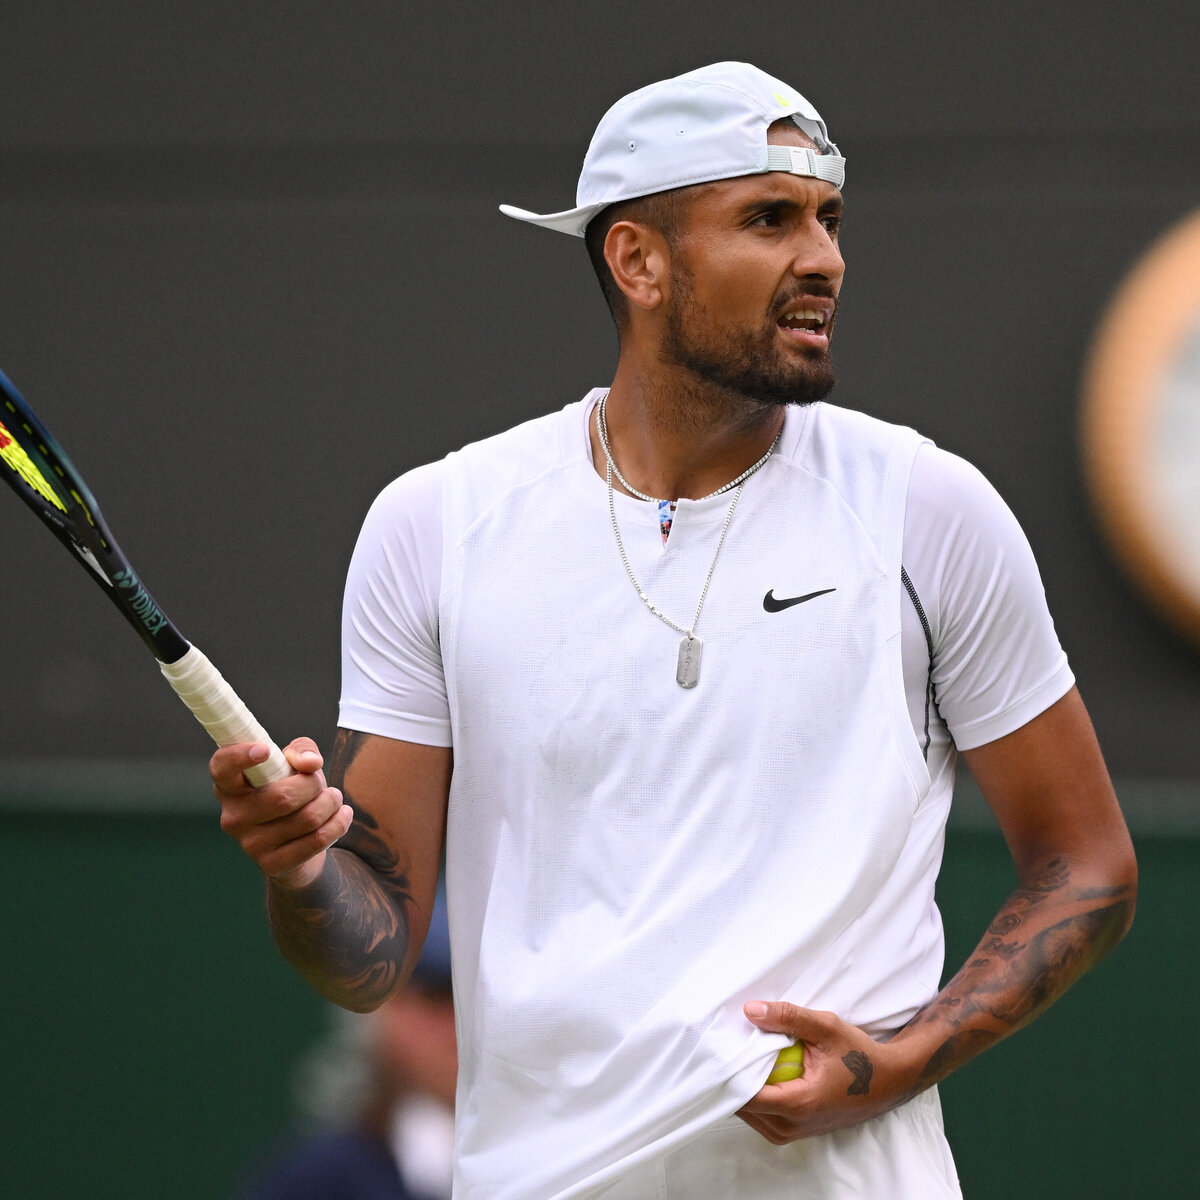 Wimbledon Nick Kyrgios schlägt Stefanos Tsitsipas nach großem Drama · tennisnet